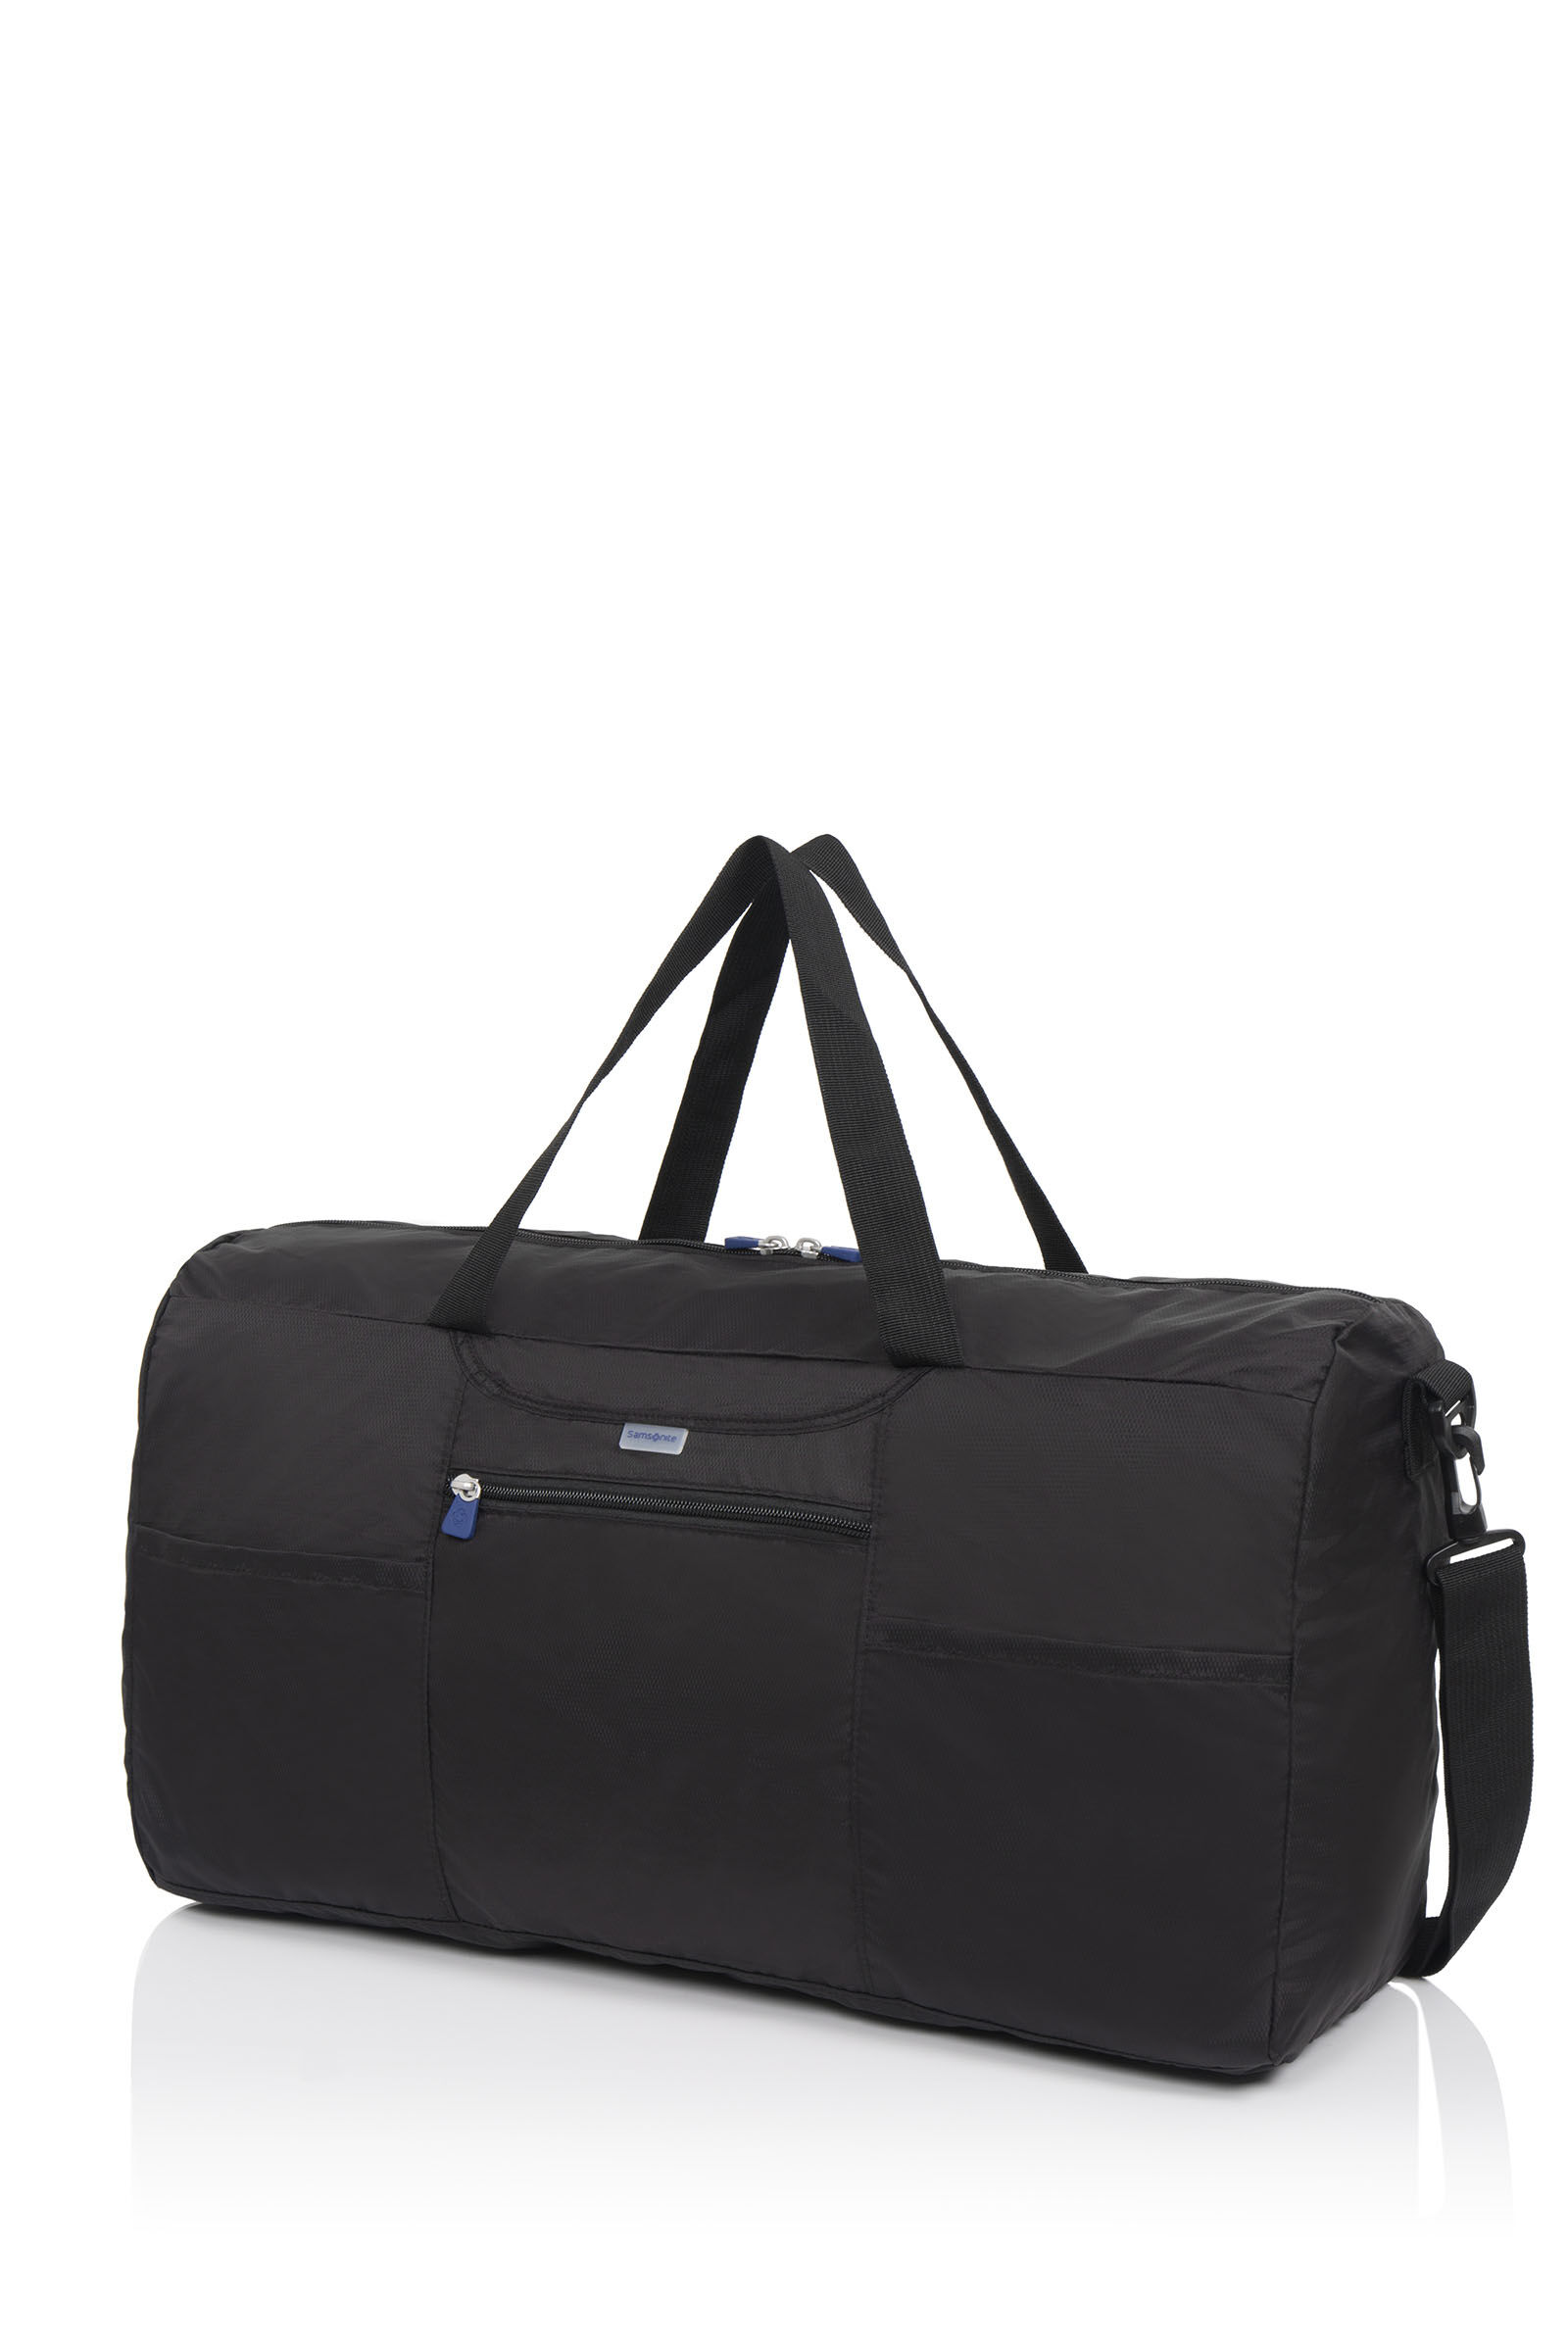 Polyester Multicolor Foldable Travel Bag SizeDimension 40x22x30 cm